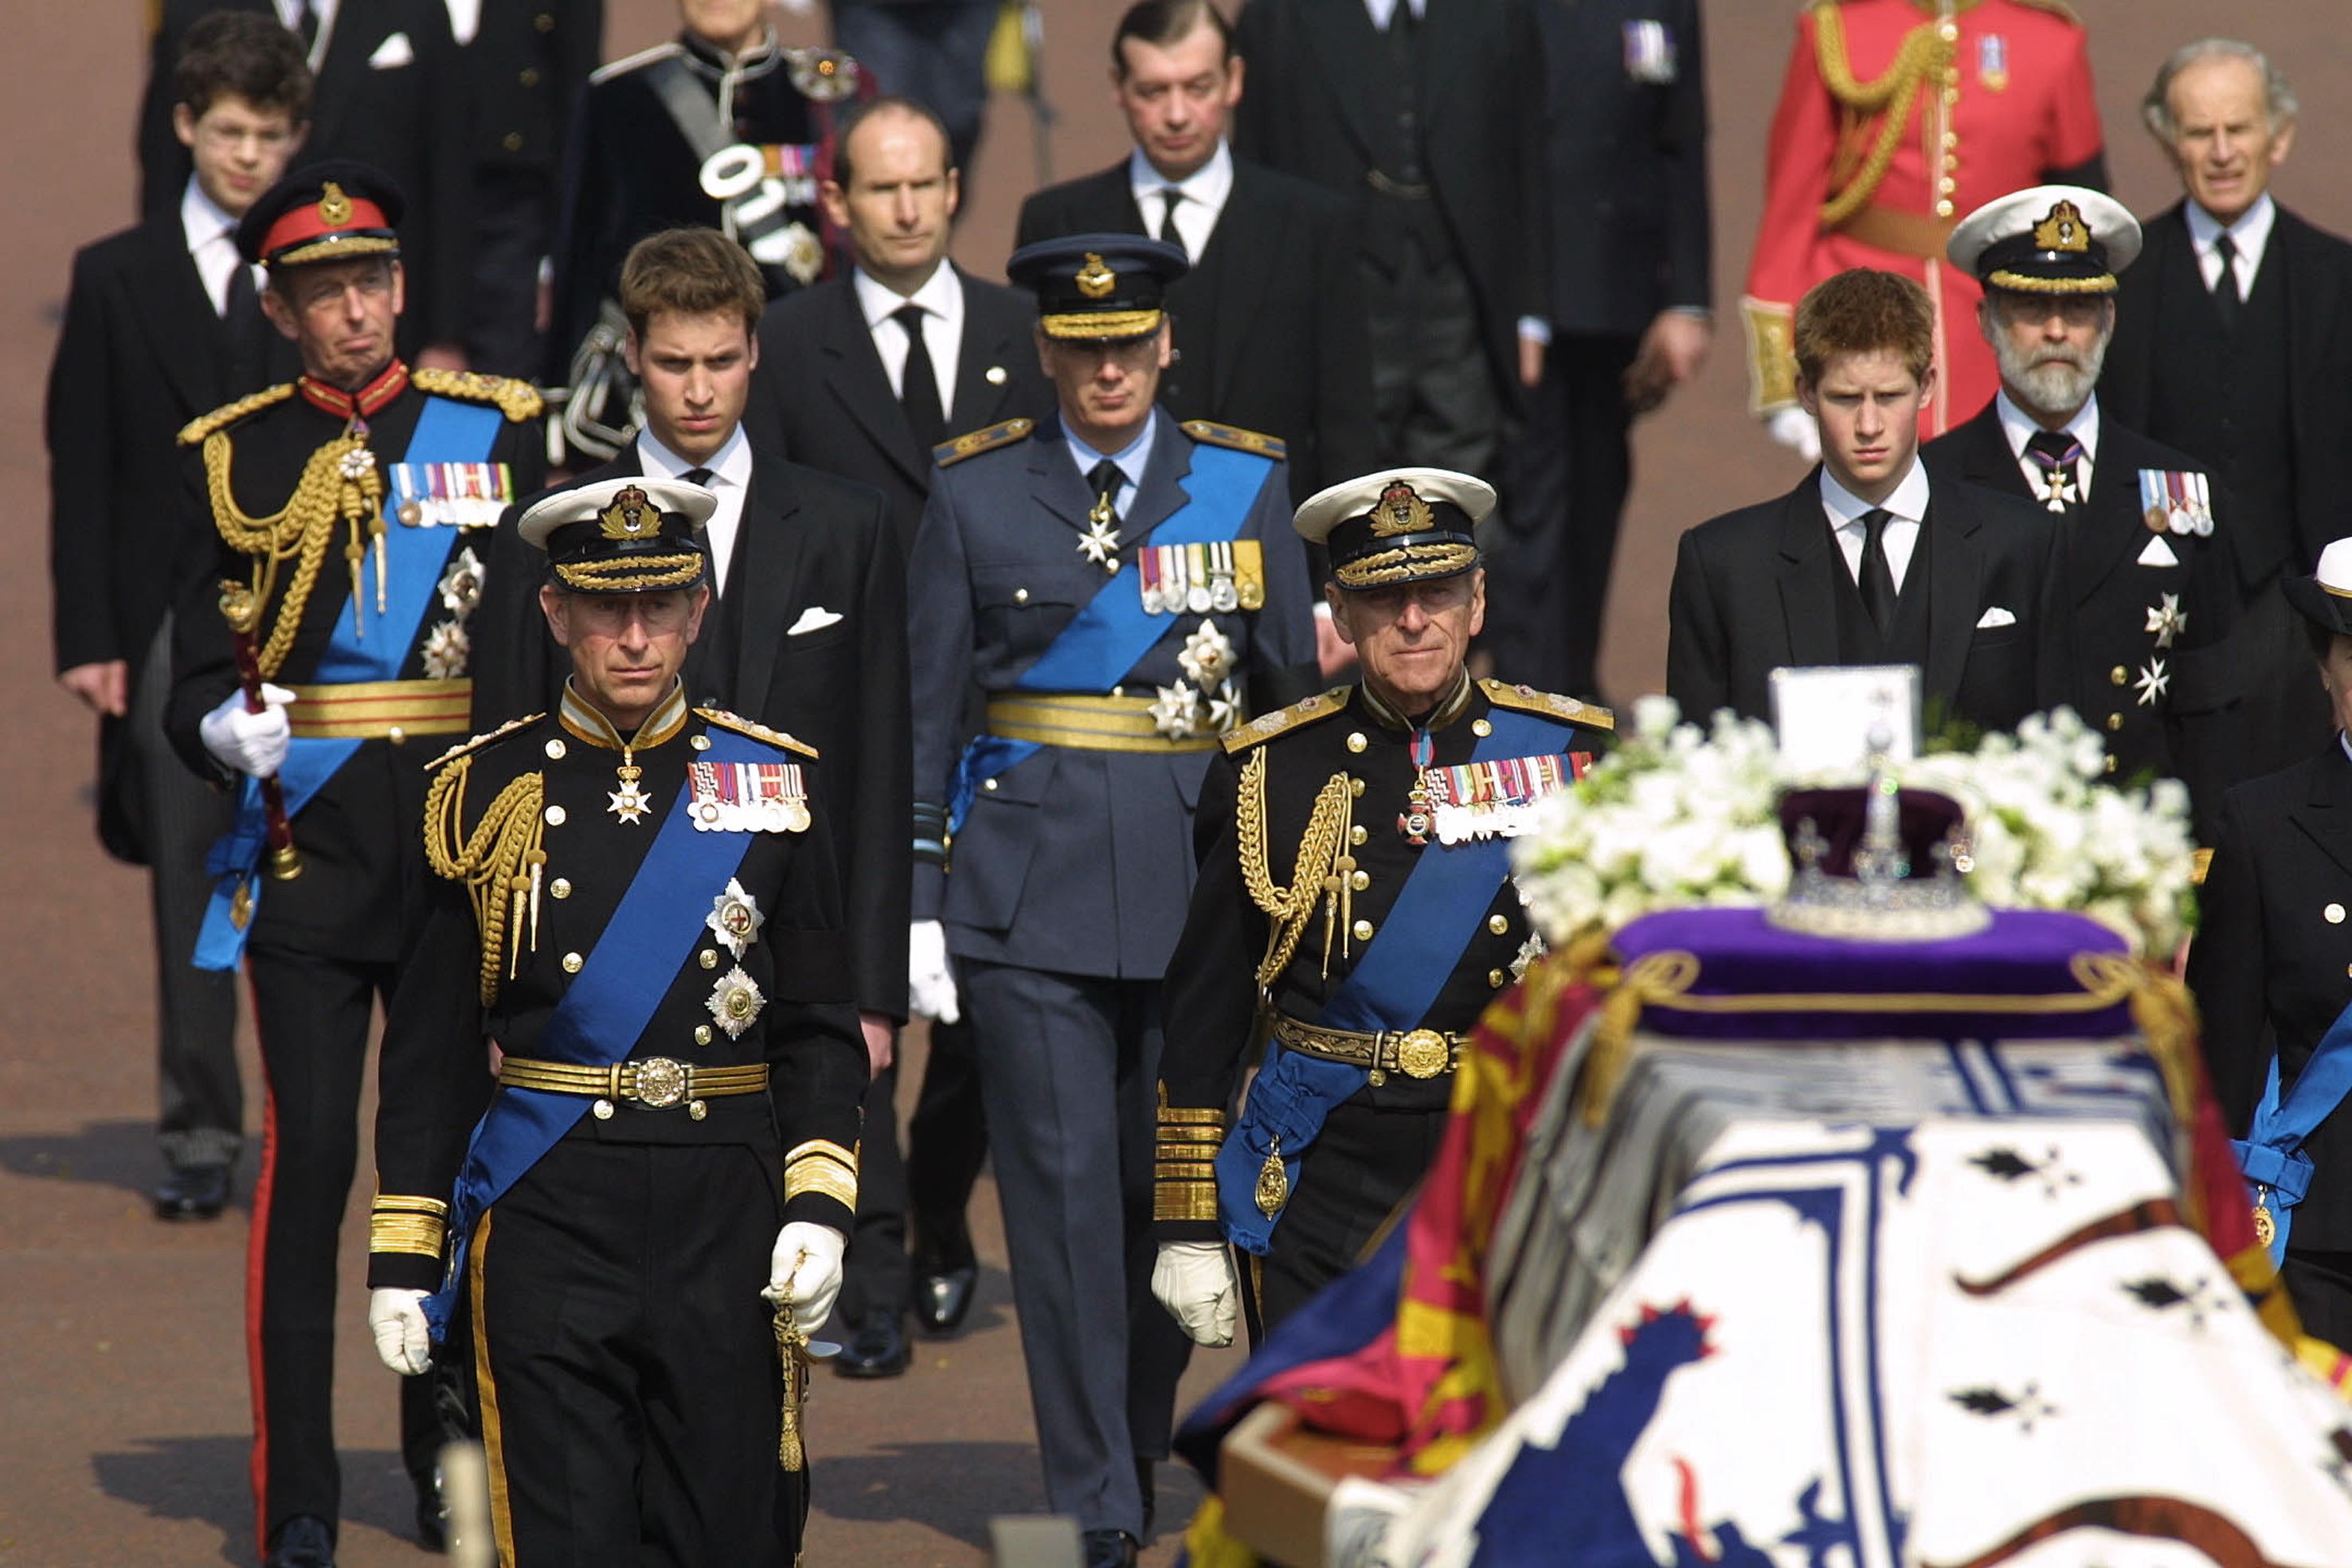 Codenames for When Prince Charles, Queen Elizabeth & Prince Philip Die